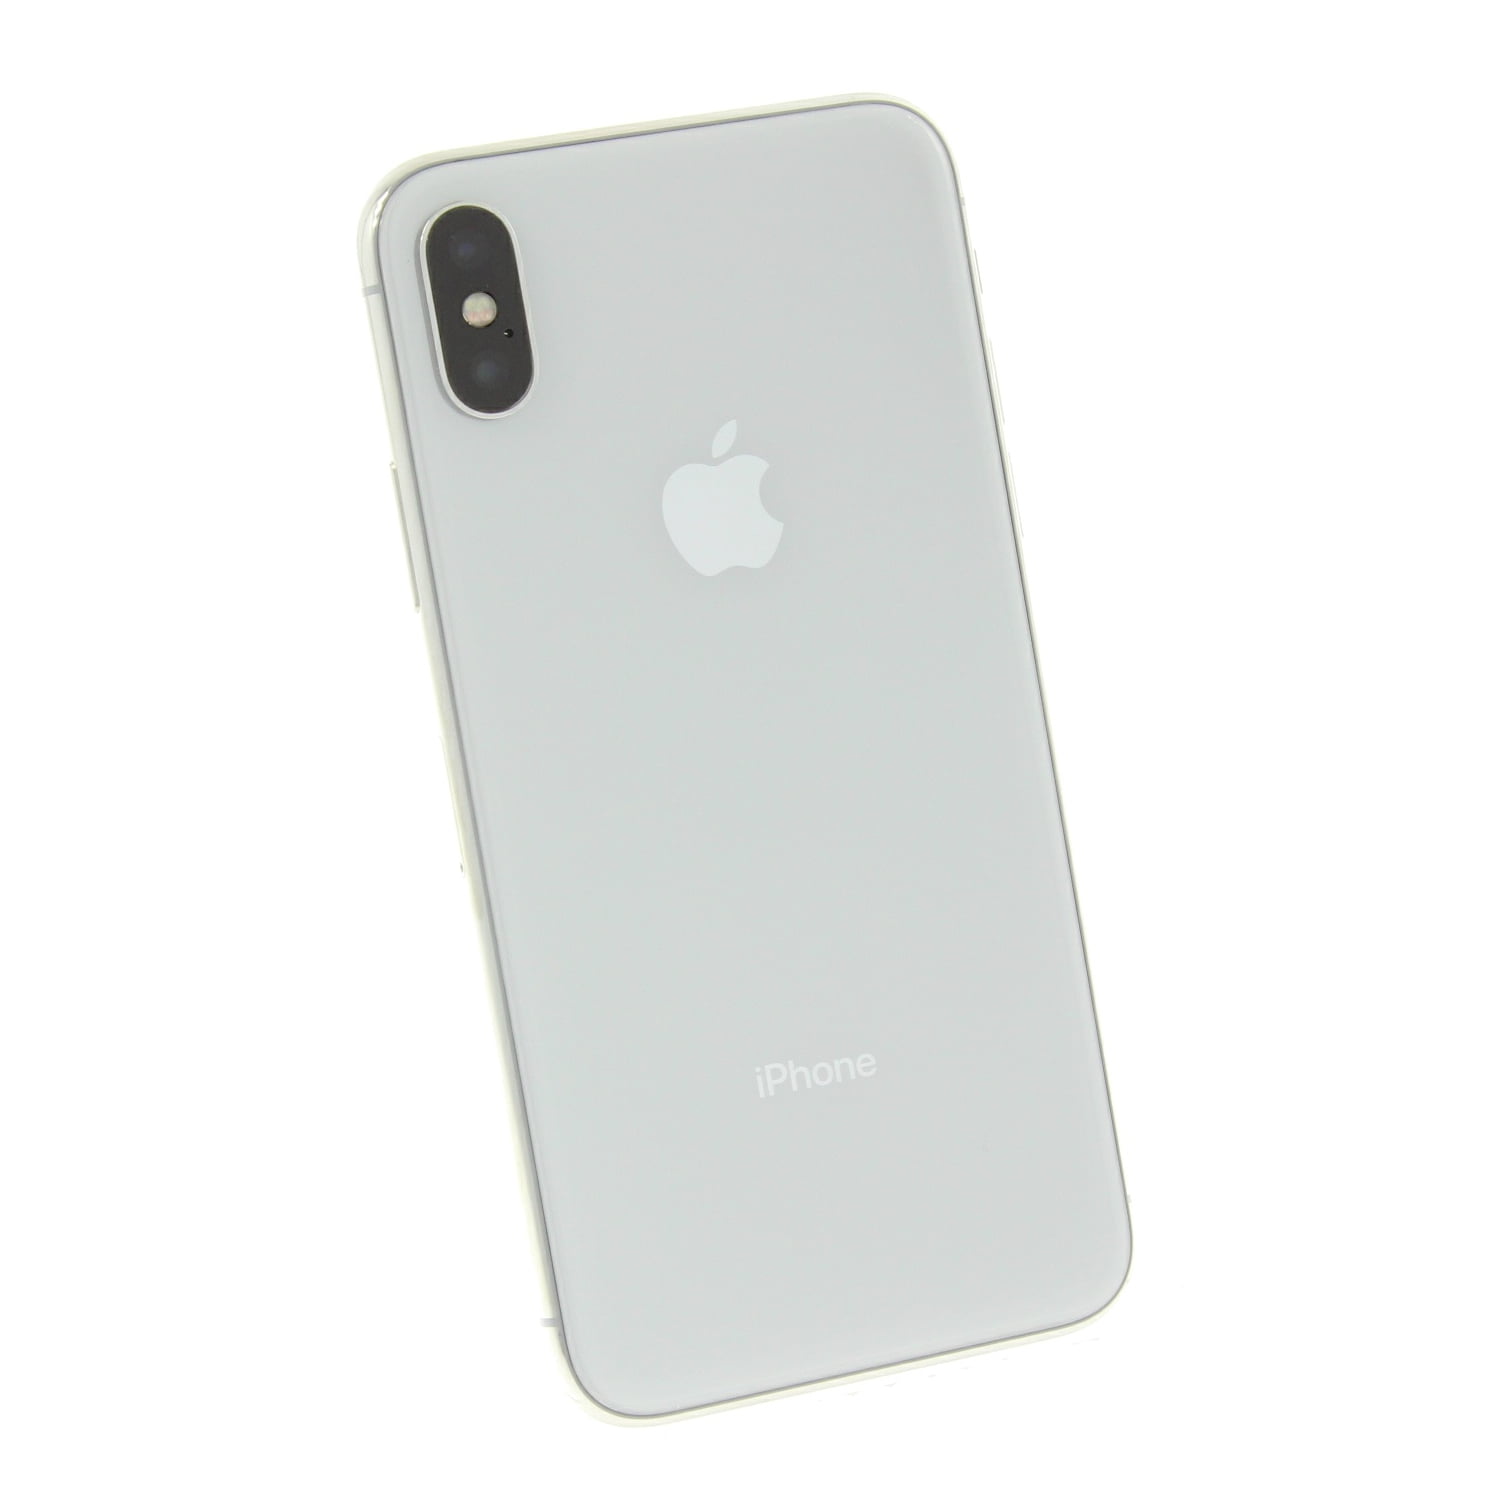 Apple iPhone X a1901 64GB GSM Unlocked (Refurbished) - Walmart.com